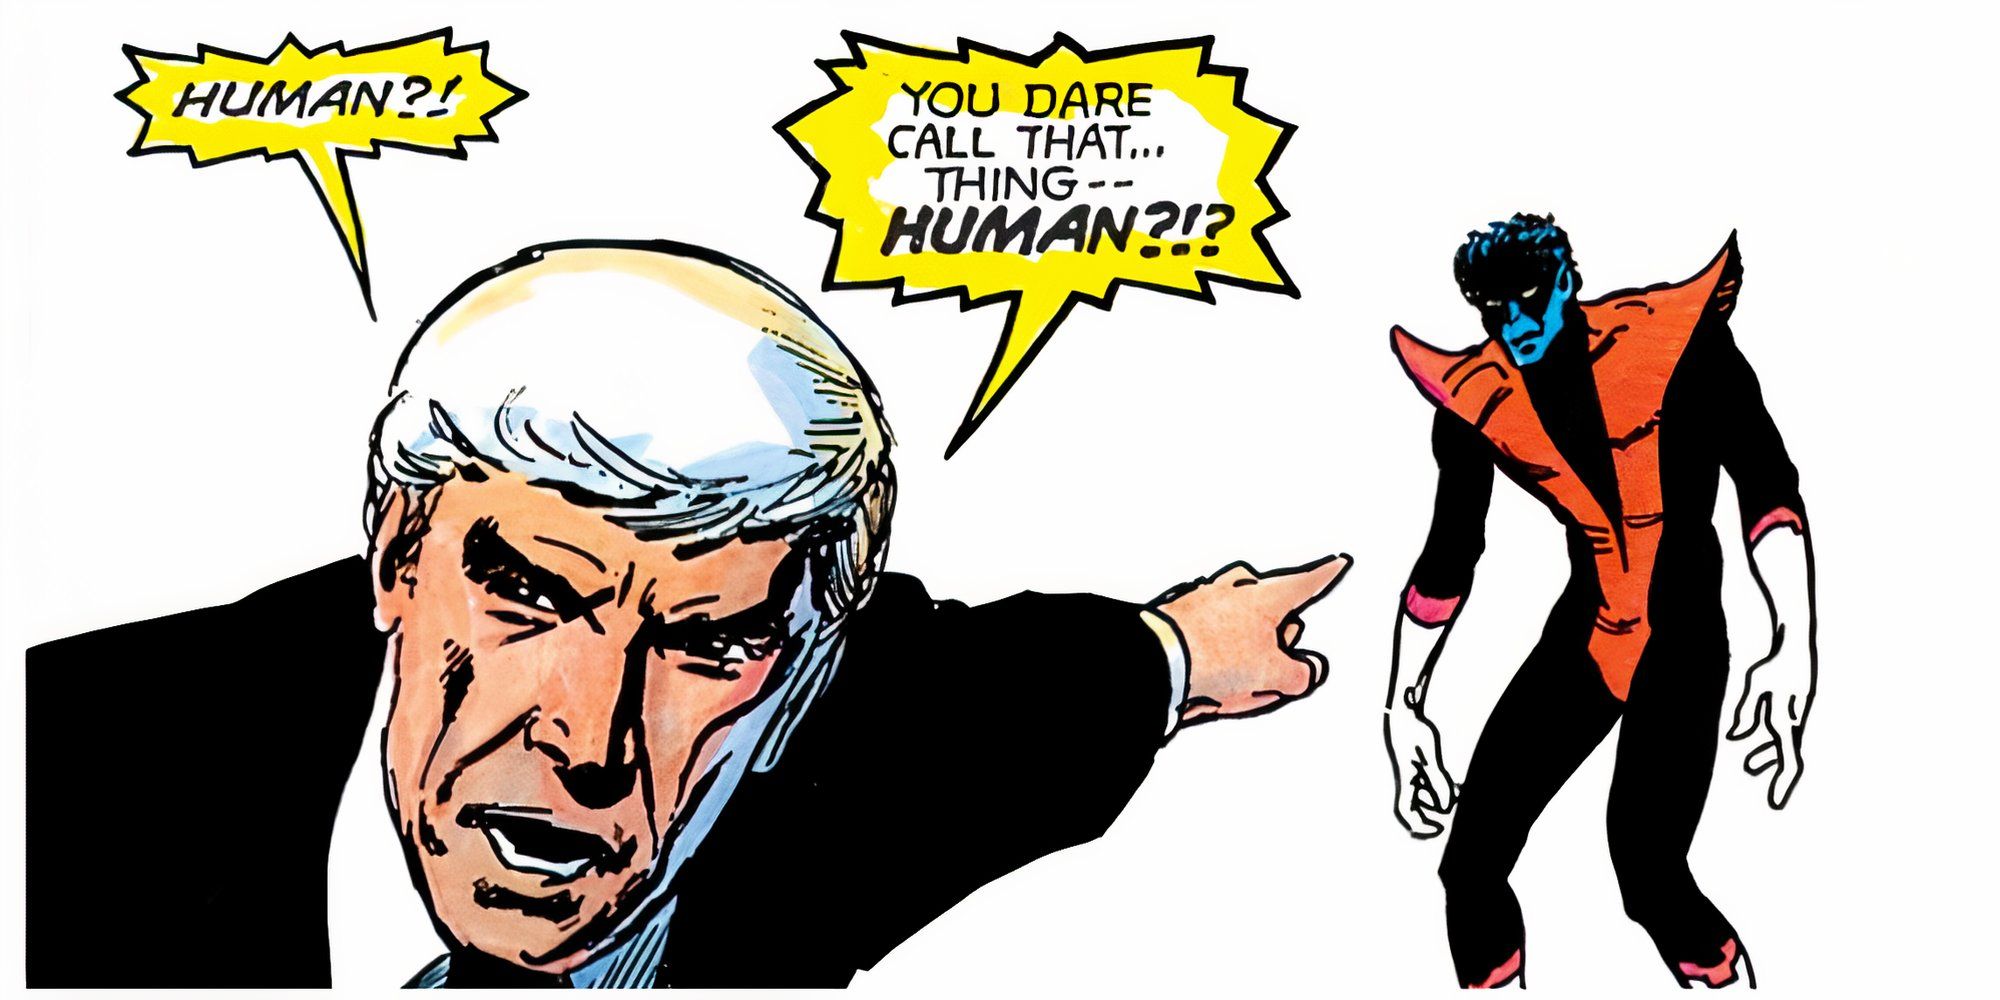 Anti-mutant Propaganda in X-Men comics